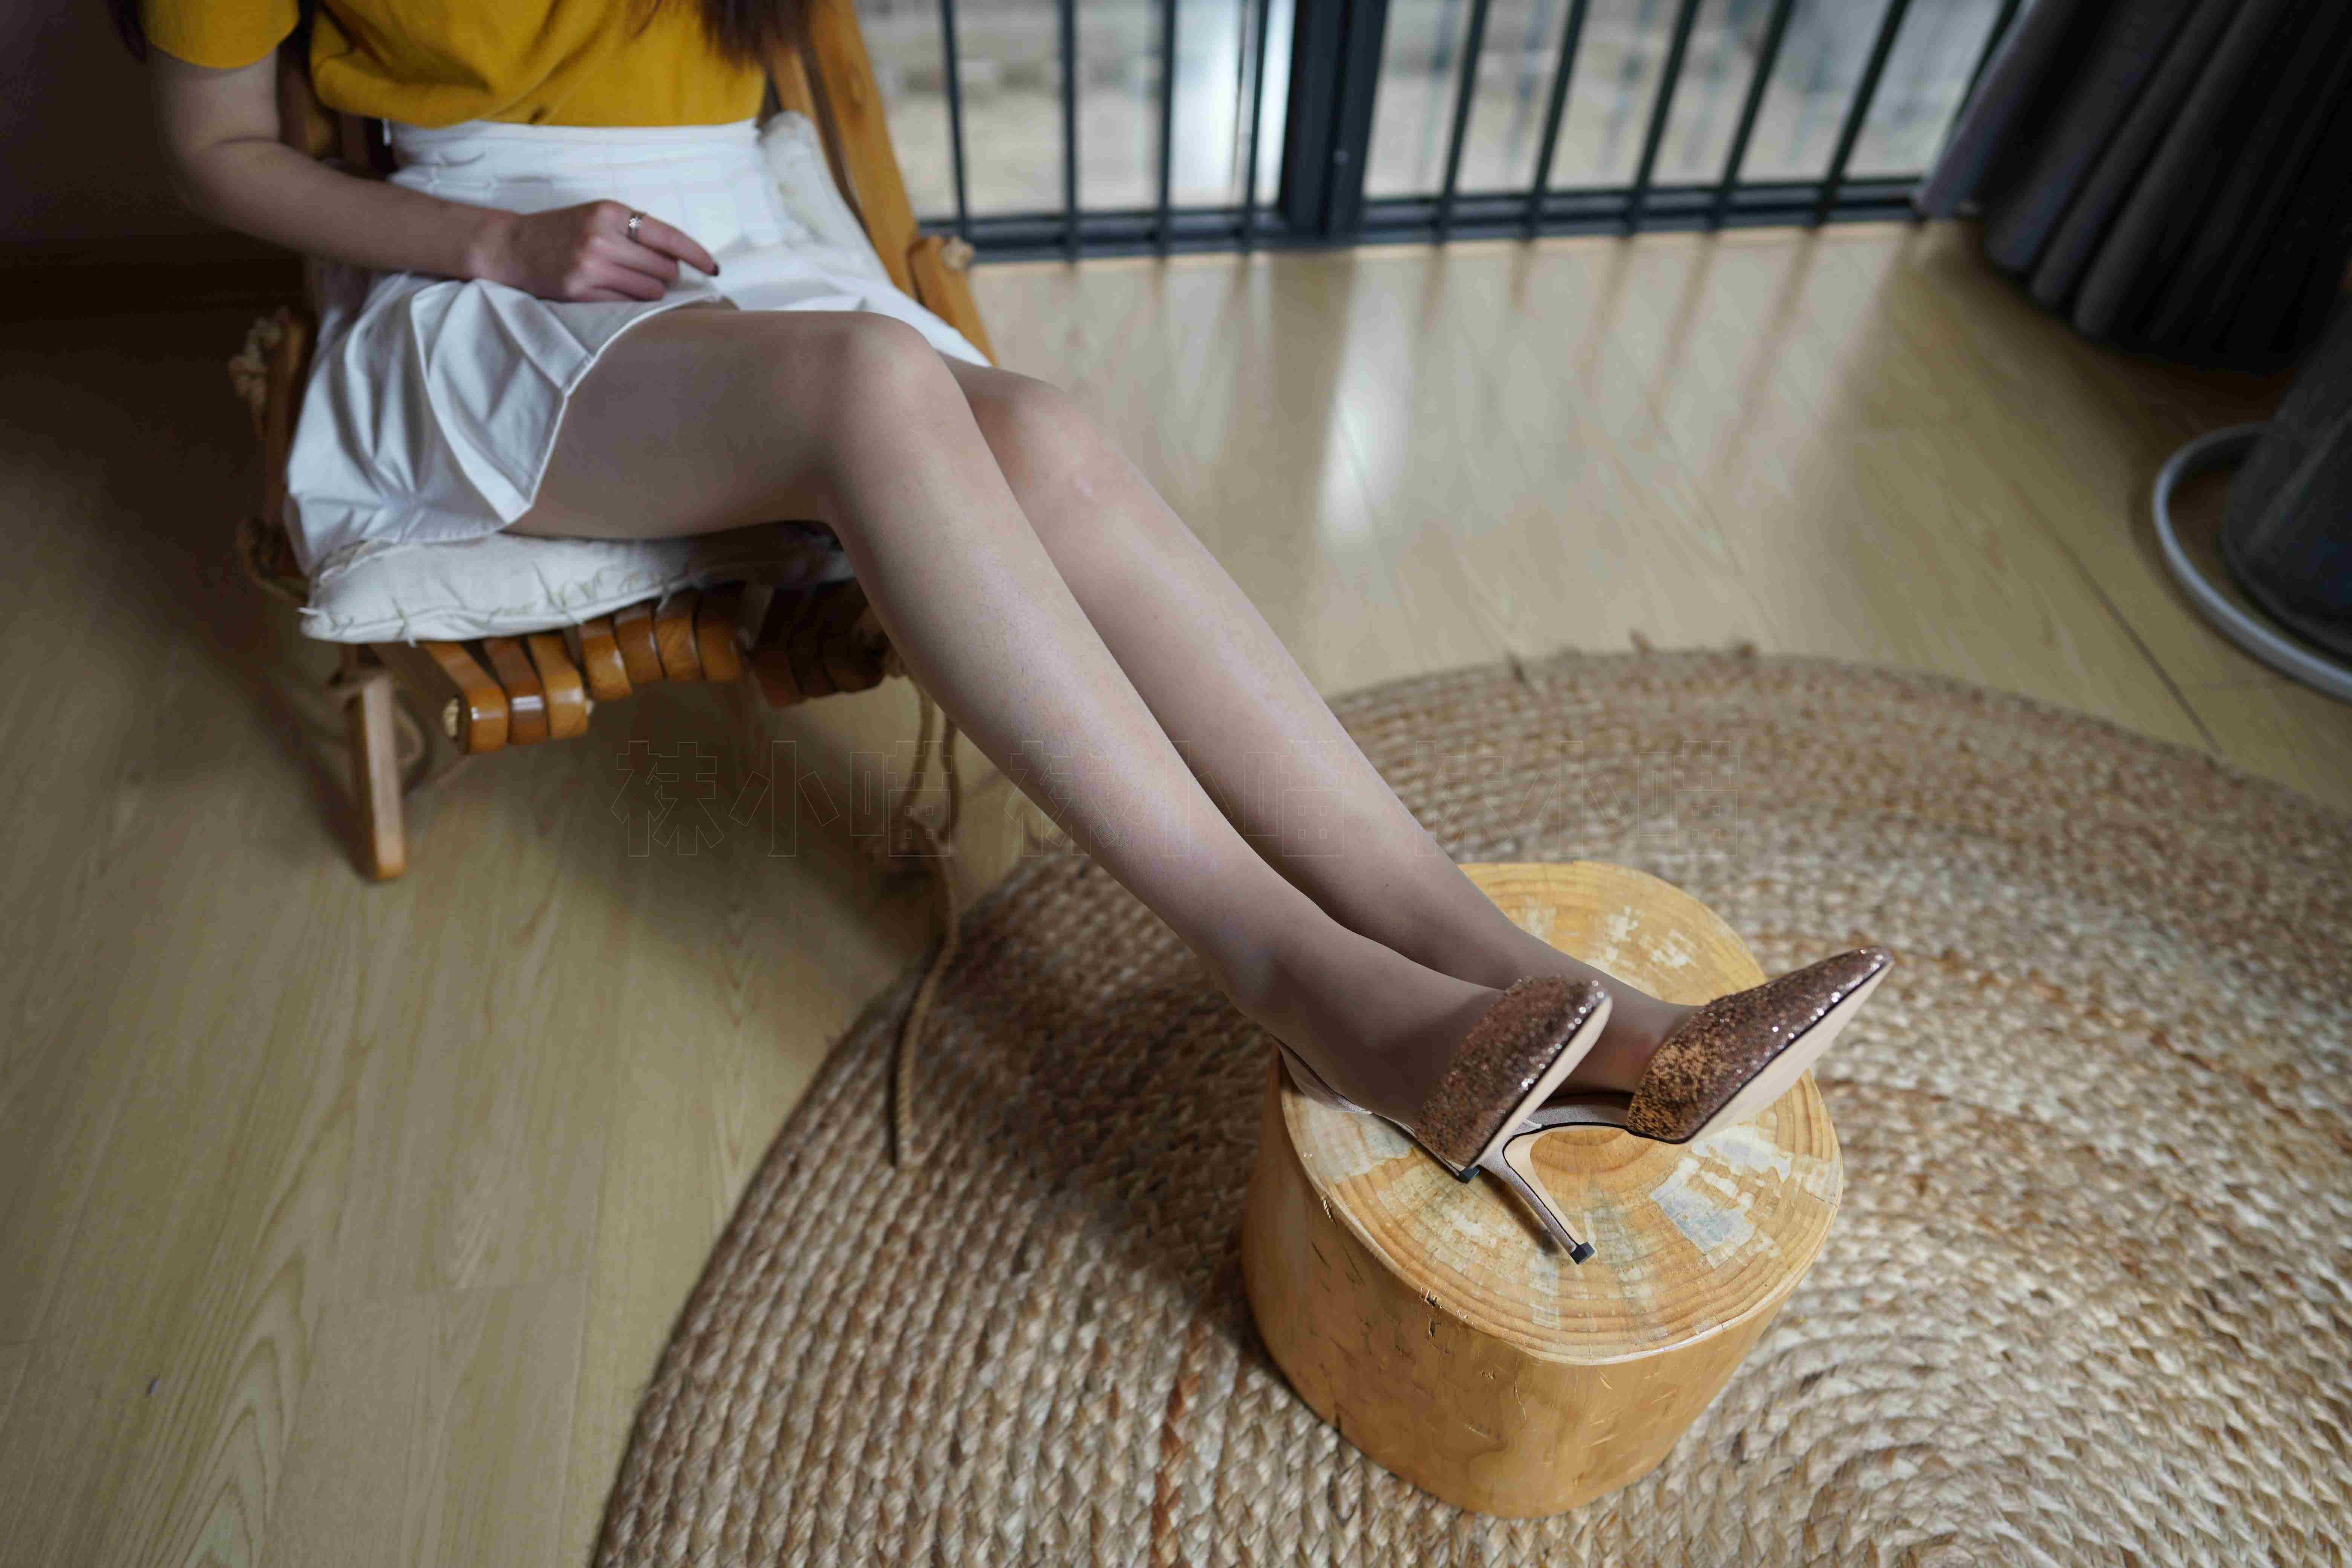 China Beauty Legs and feet 65